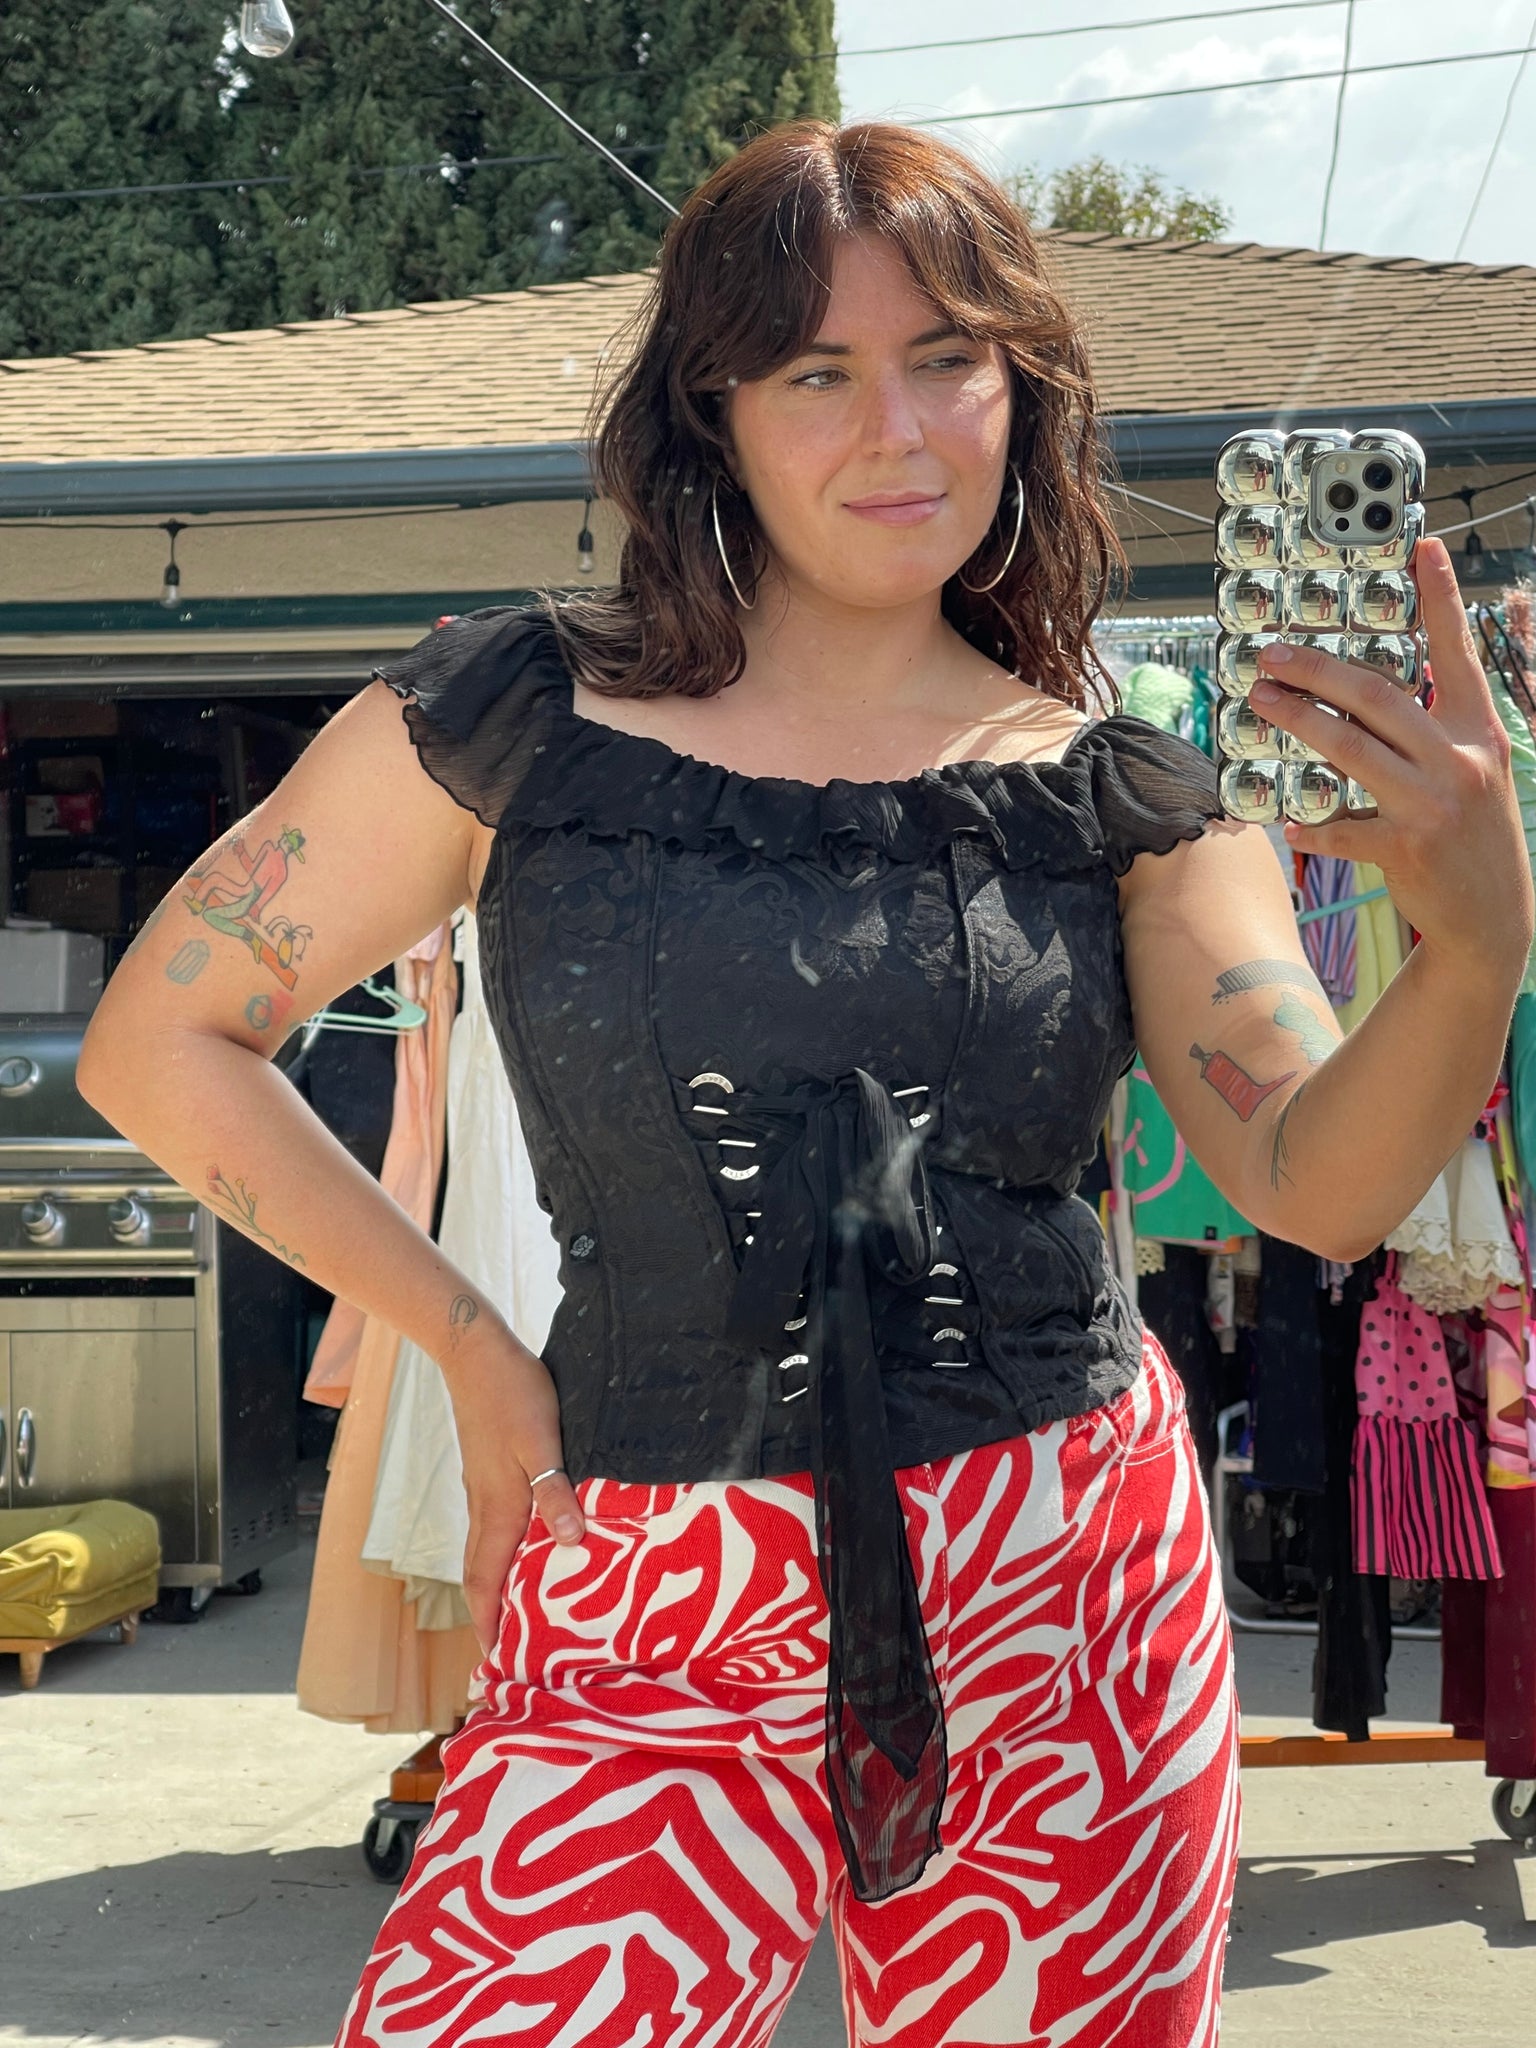 shiny floral corset